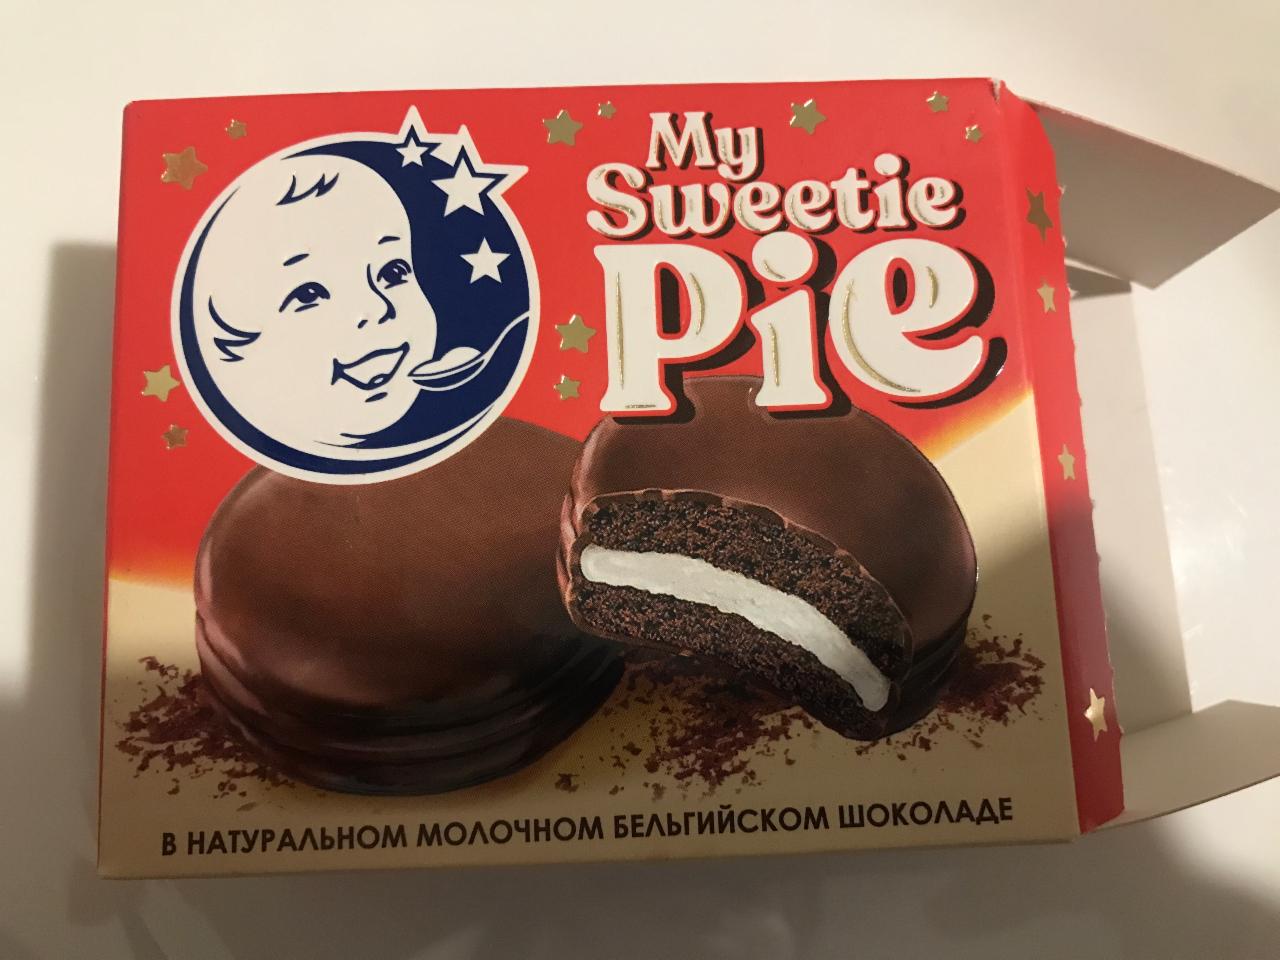 Фото - My sweetie pie Первый Шоколатье Завод В.П.Пастухова